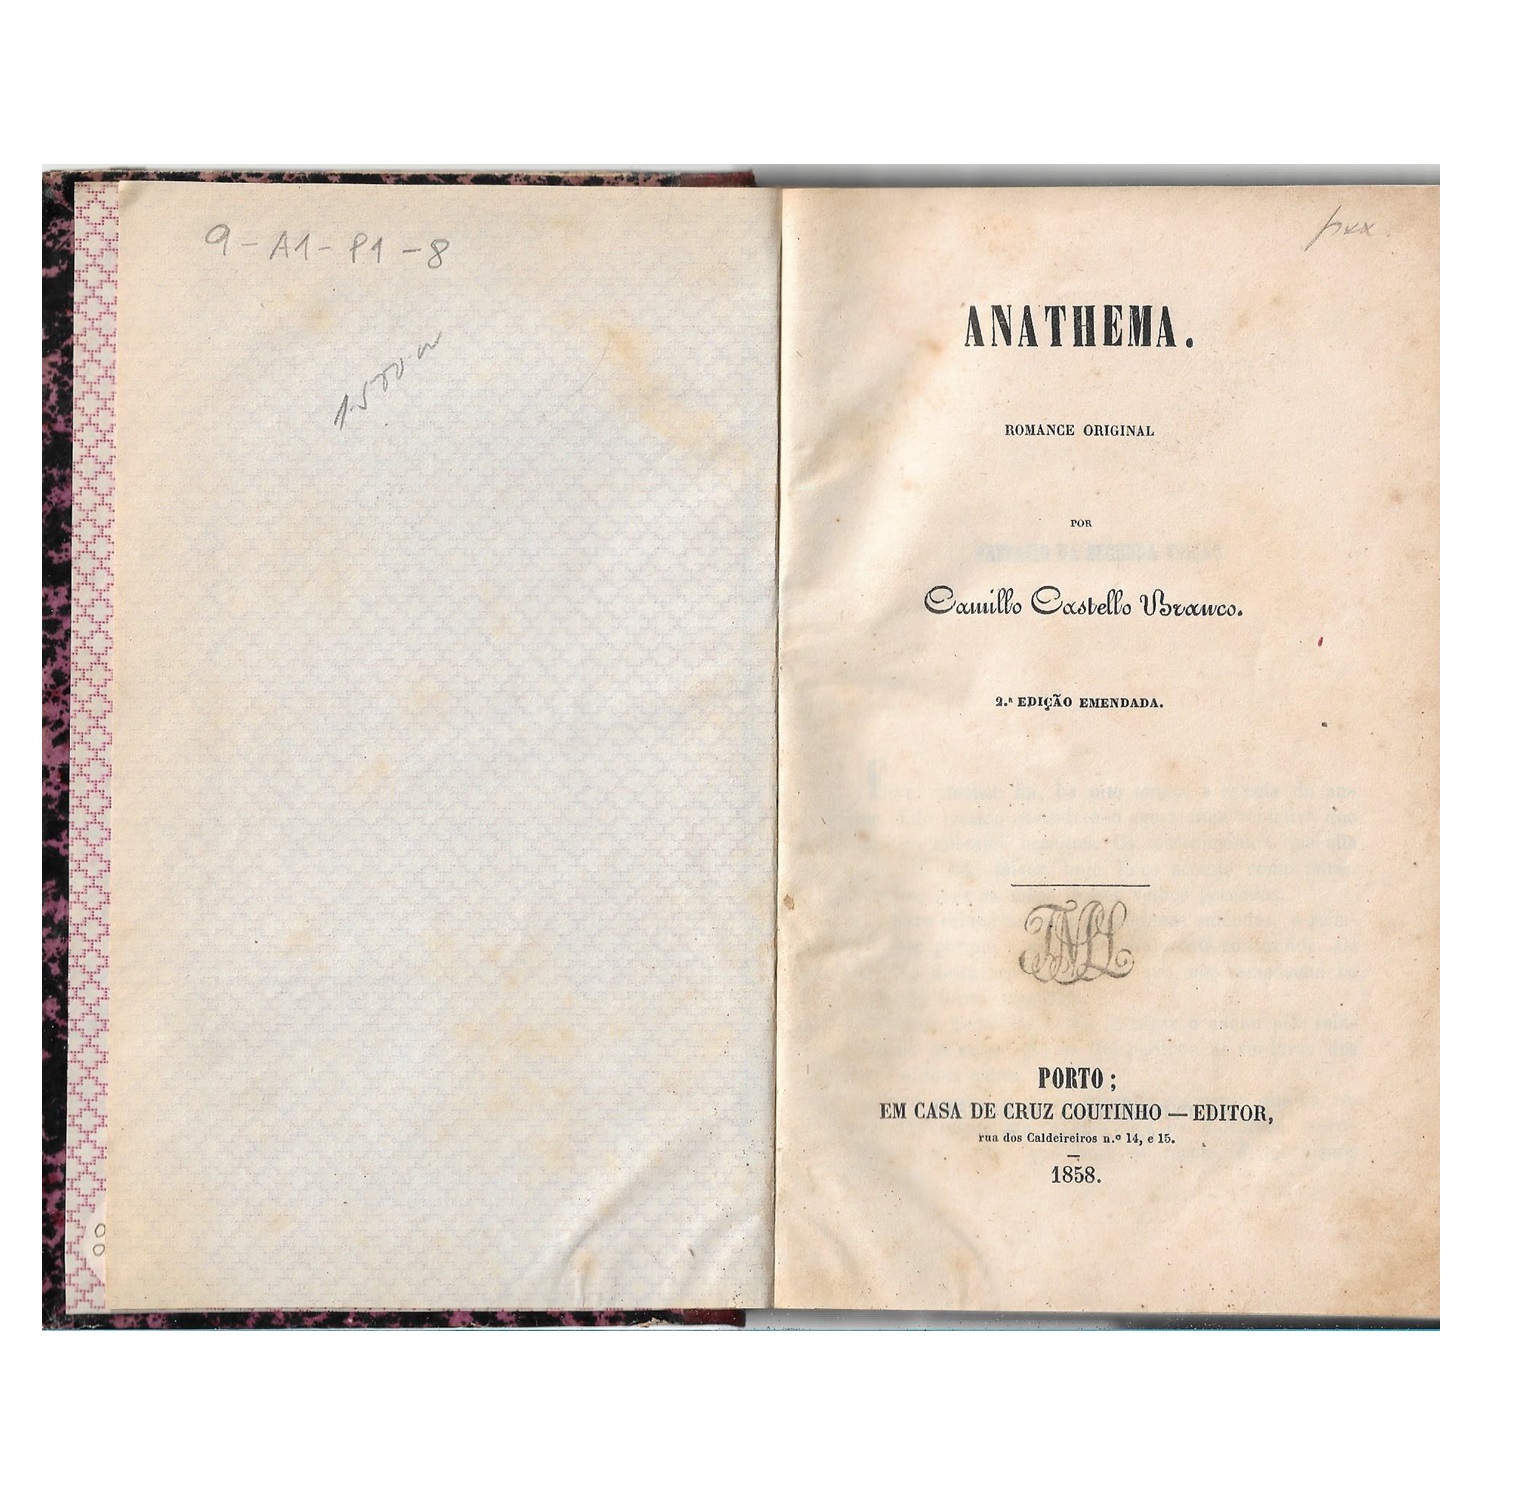 ANATHEMA [1858]